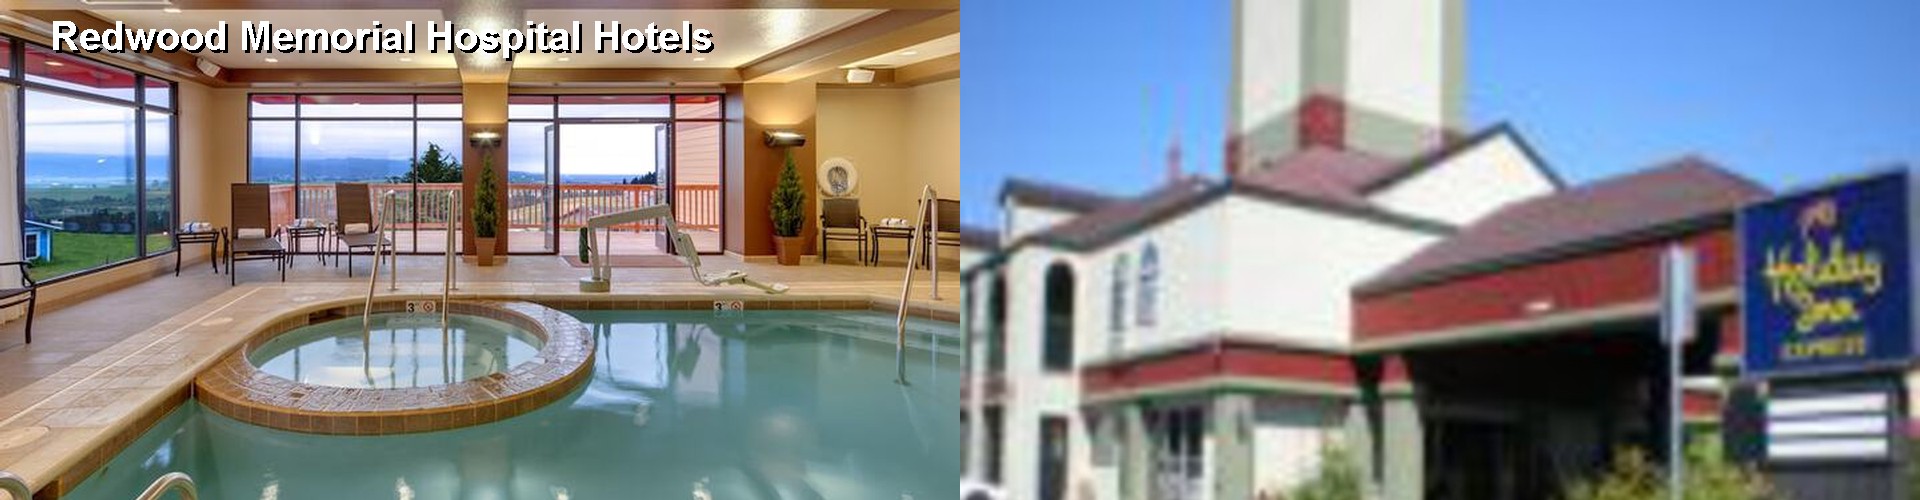 5 Best Hotels near Redwood Memorial Hospital